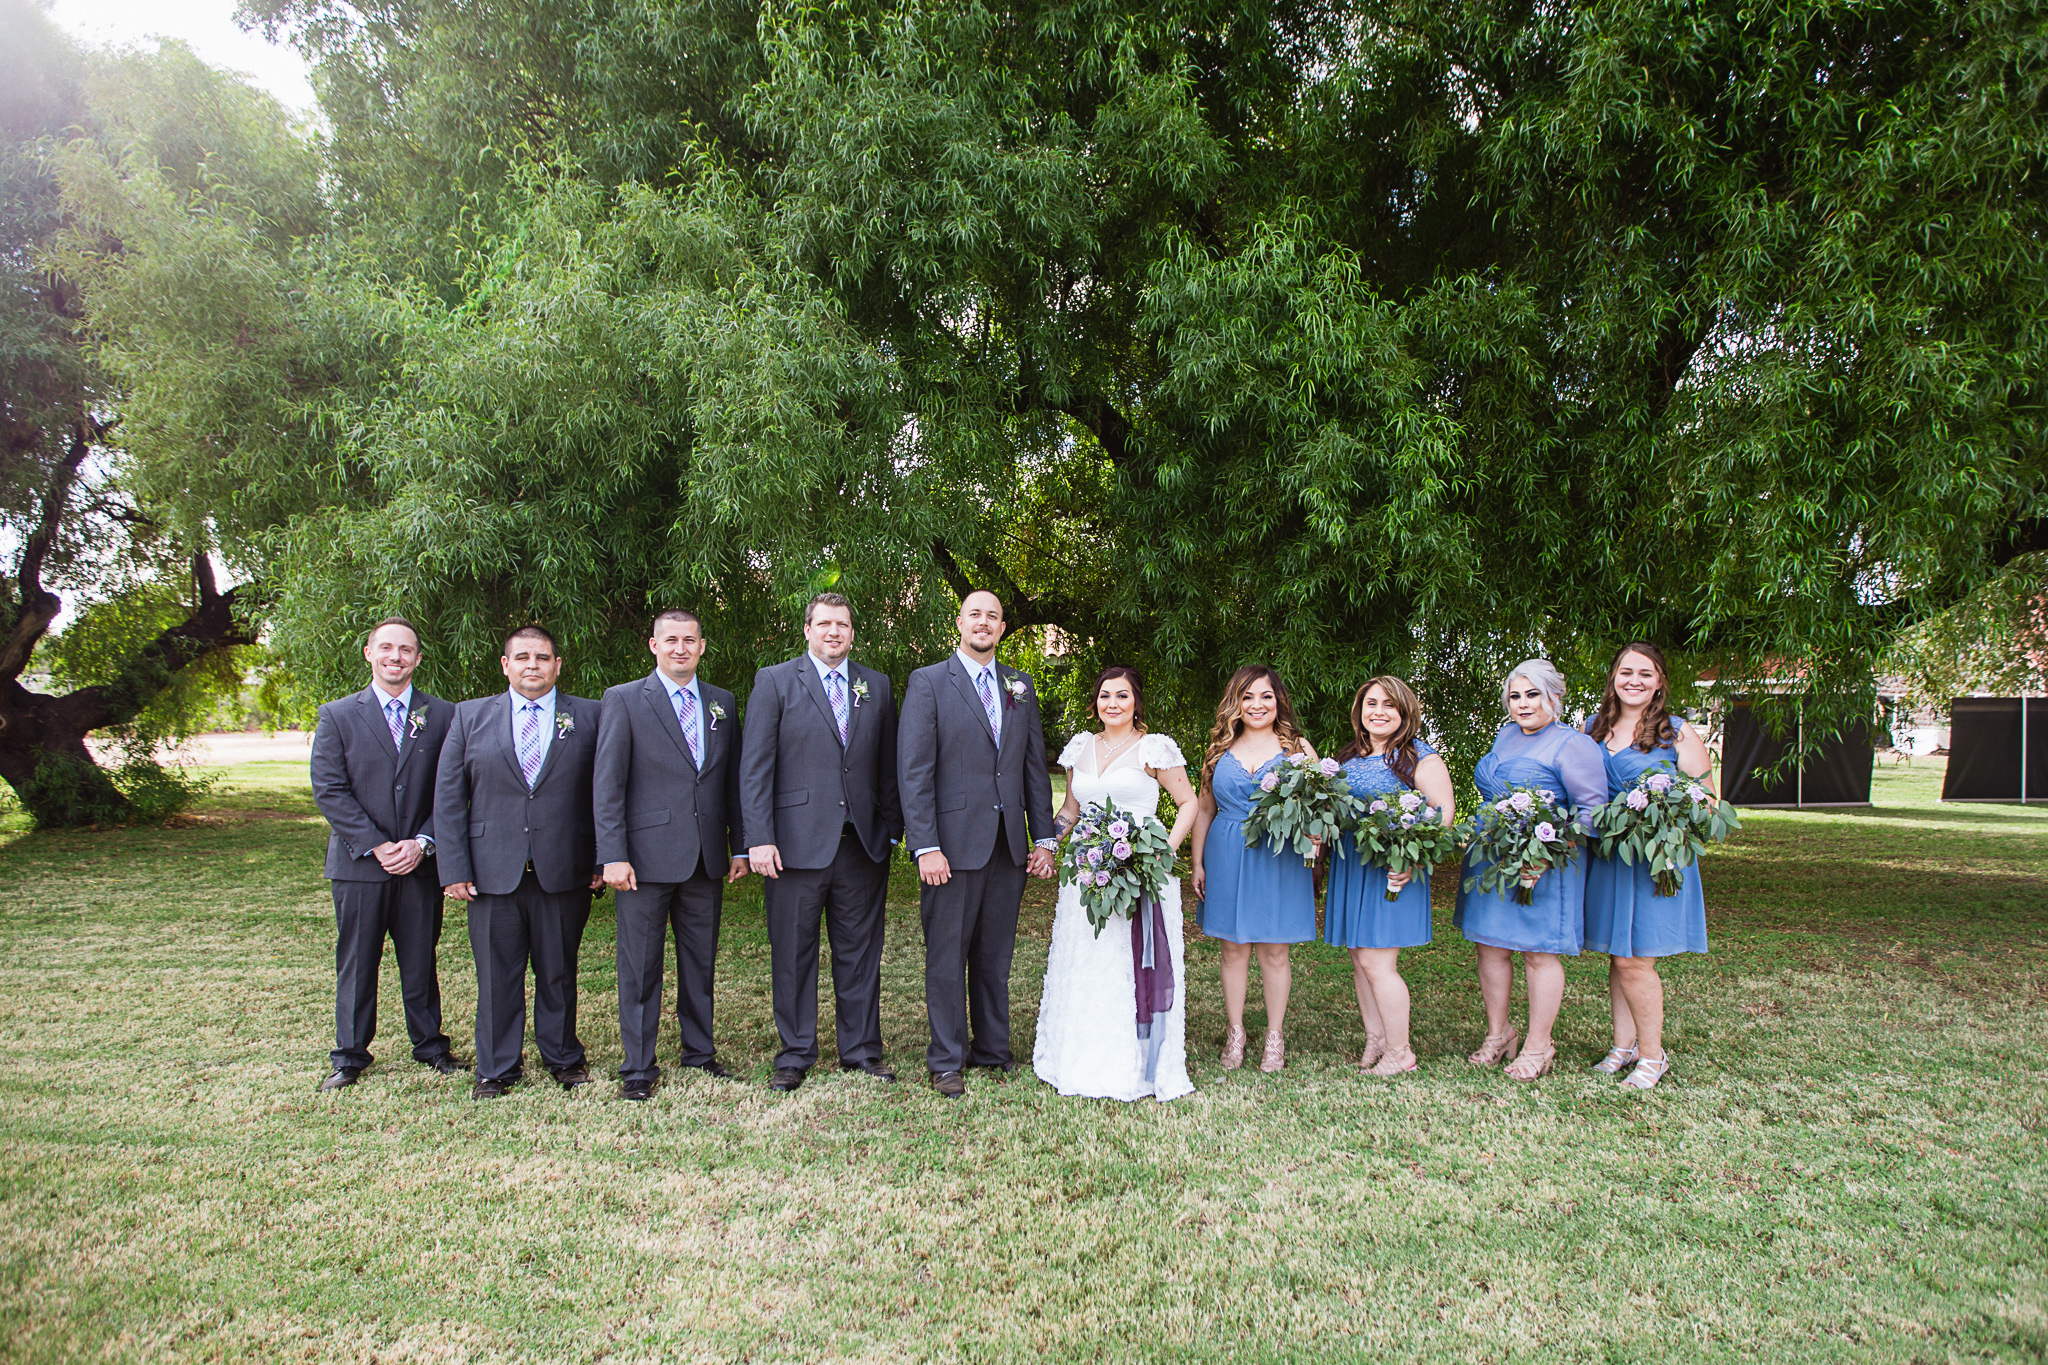 Dusty blue and lavender bridal party by Arizona wedding photographer PMA Photography.